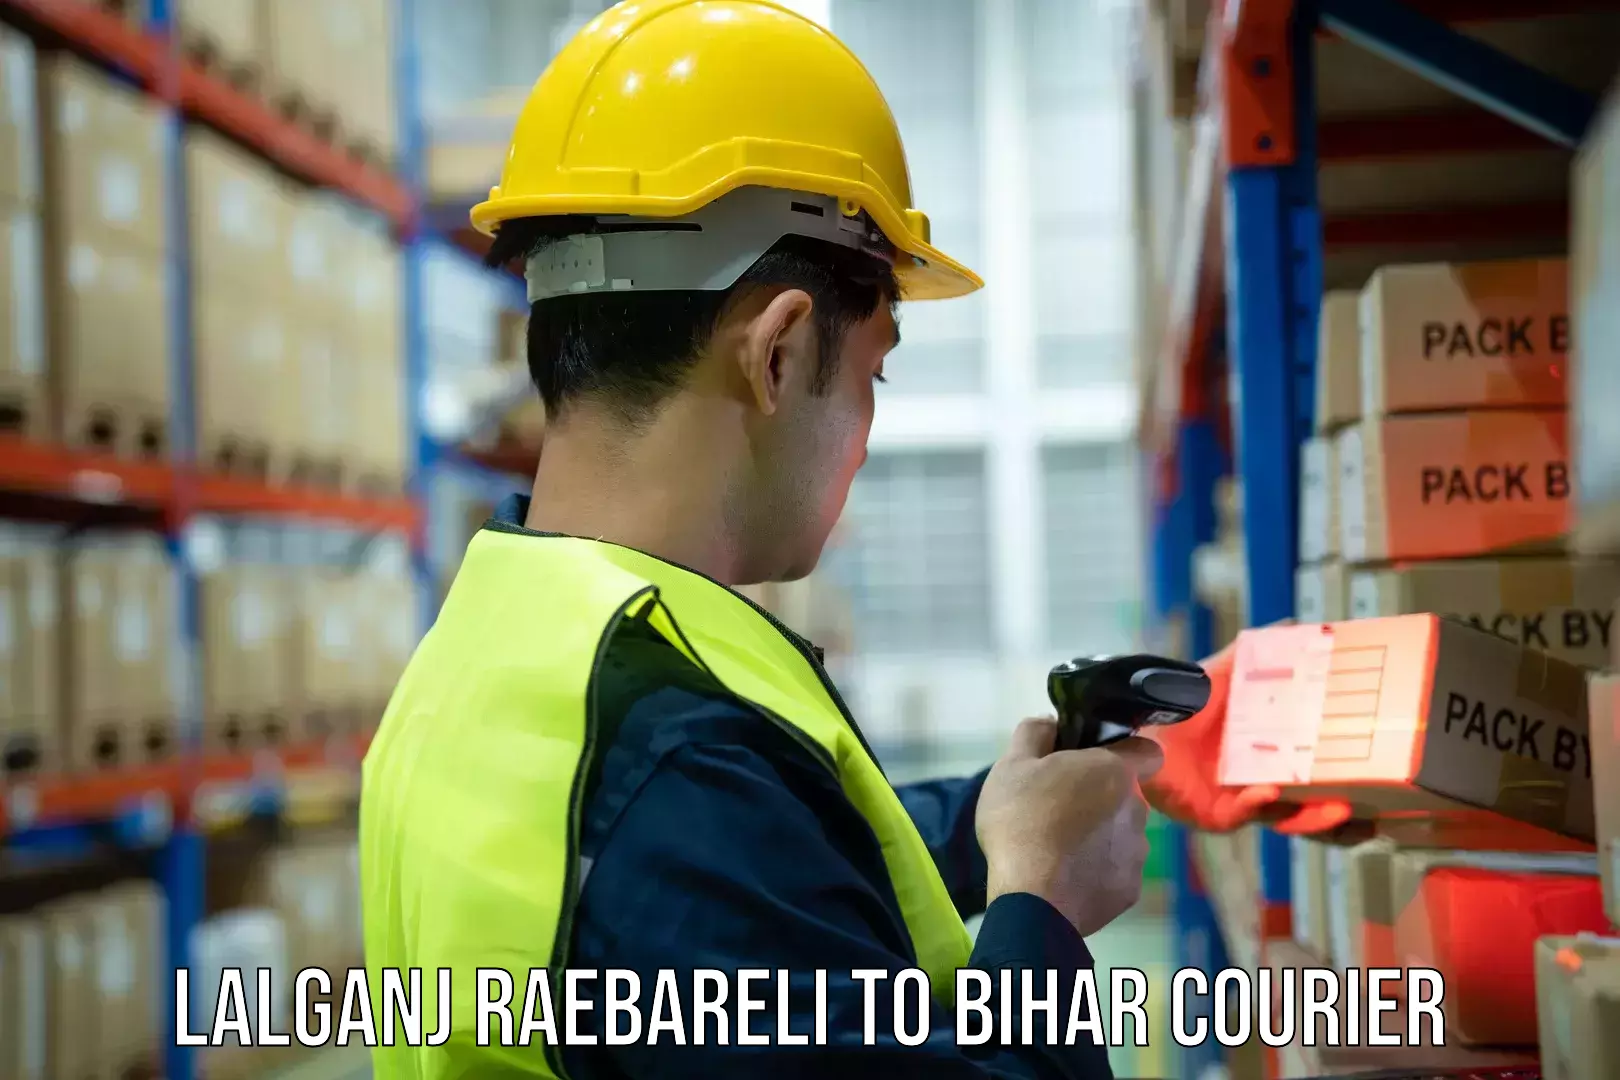 Courier service partnerships Lalganj Raebareli to Bharwara